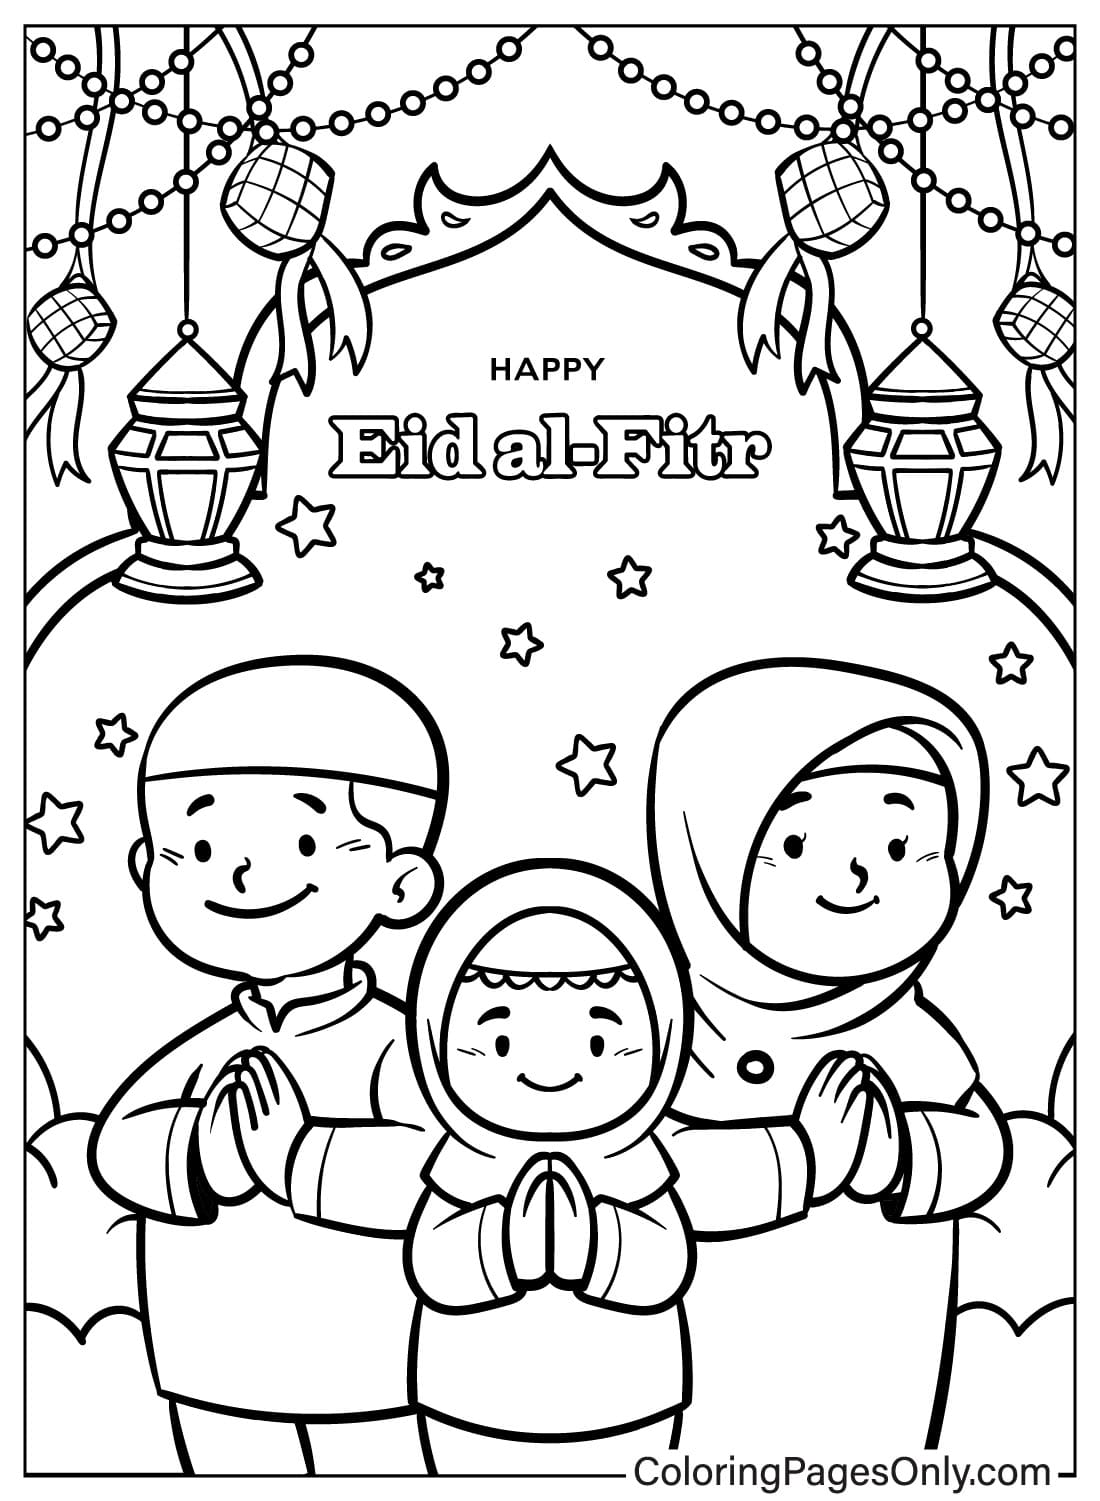 Drawing Eid Al-Fitr Coloring Page from Eid Al-Fitr